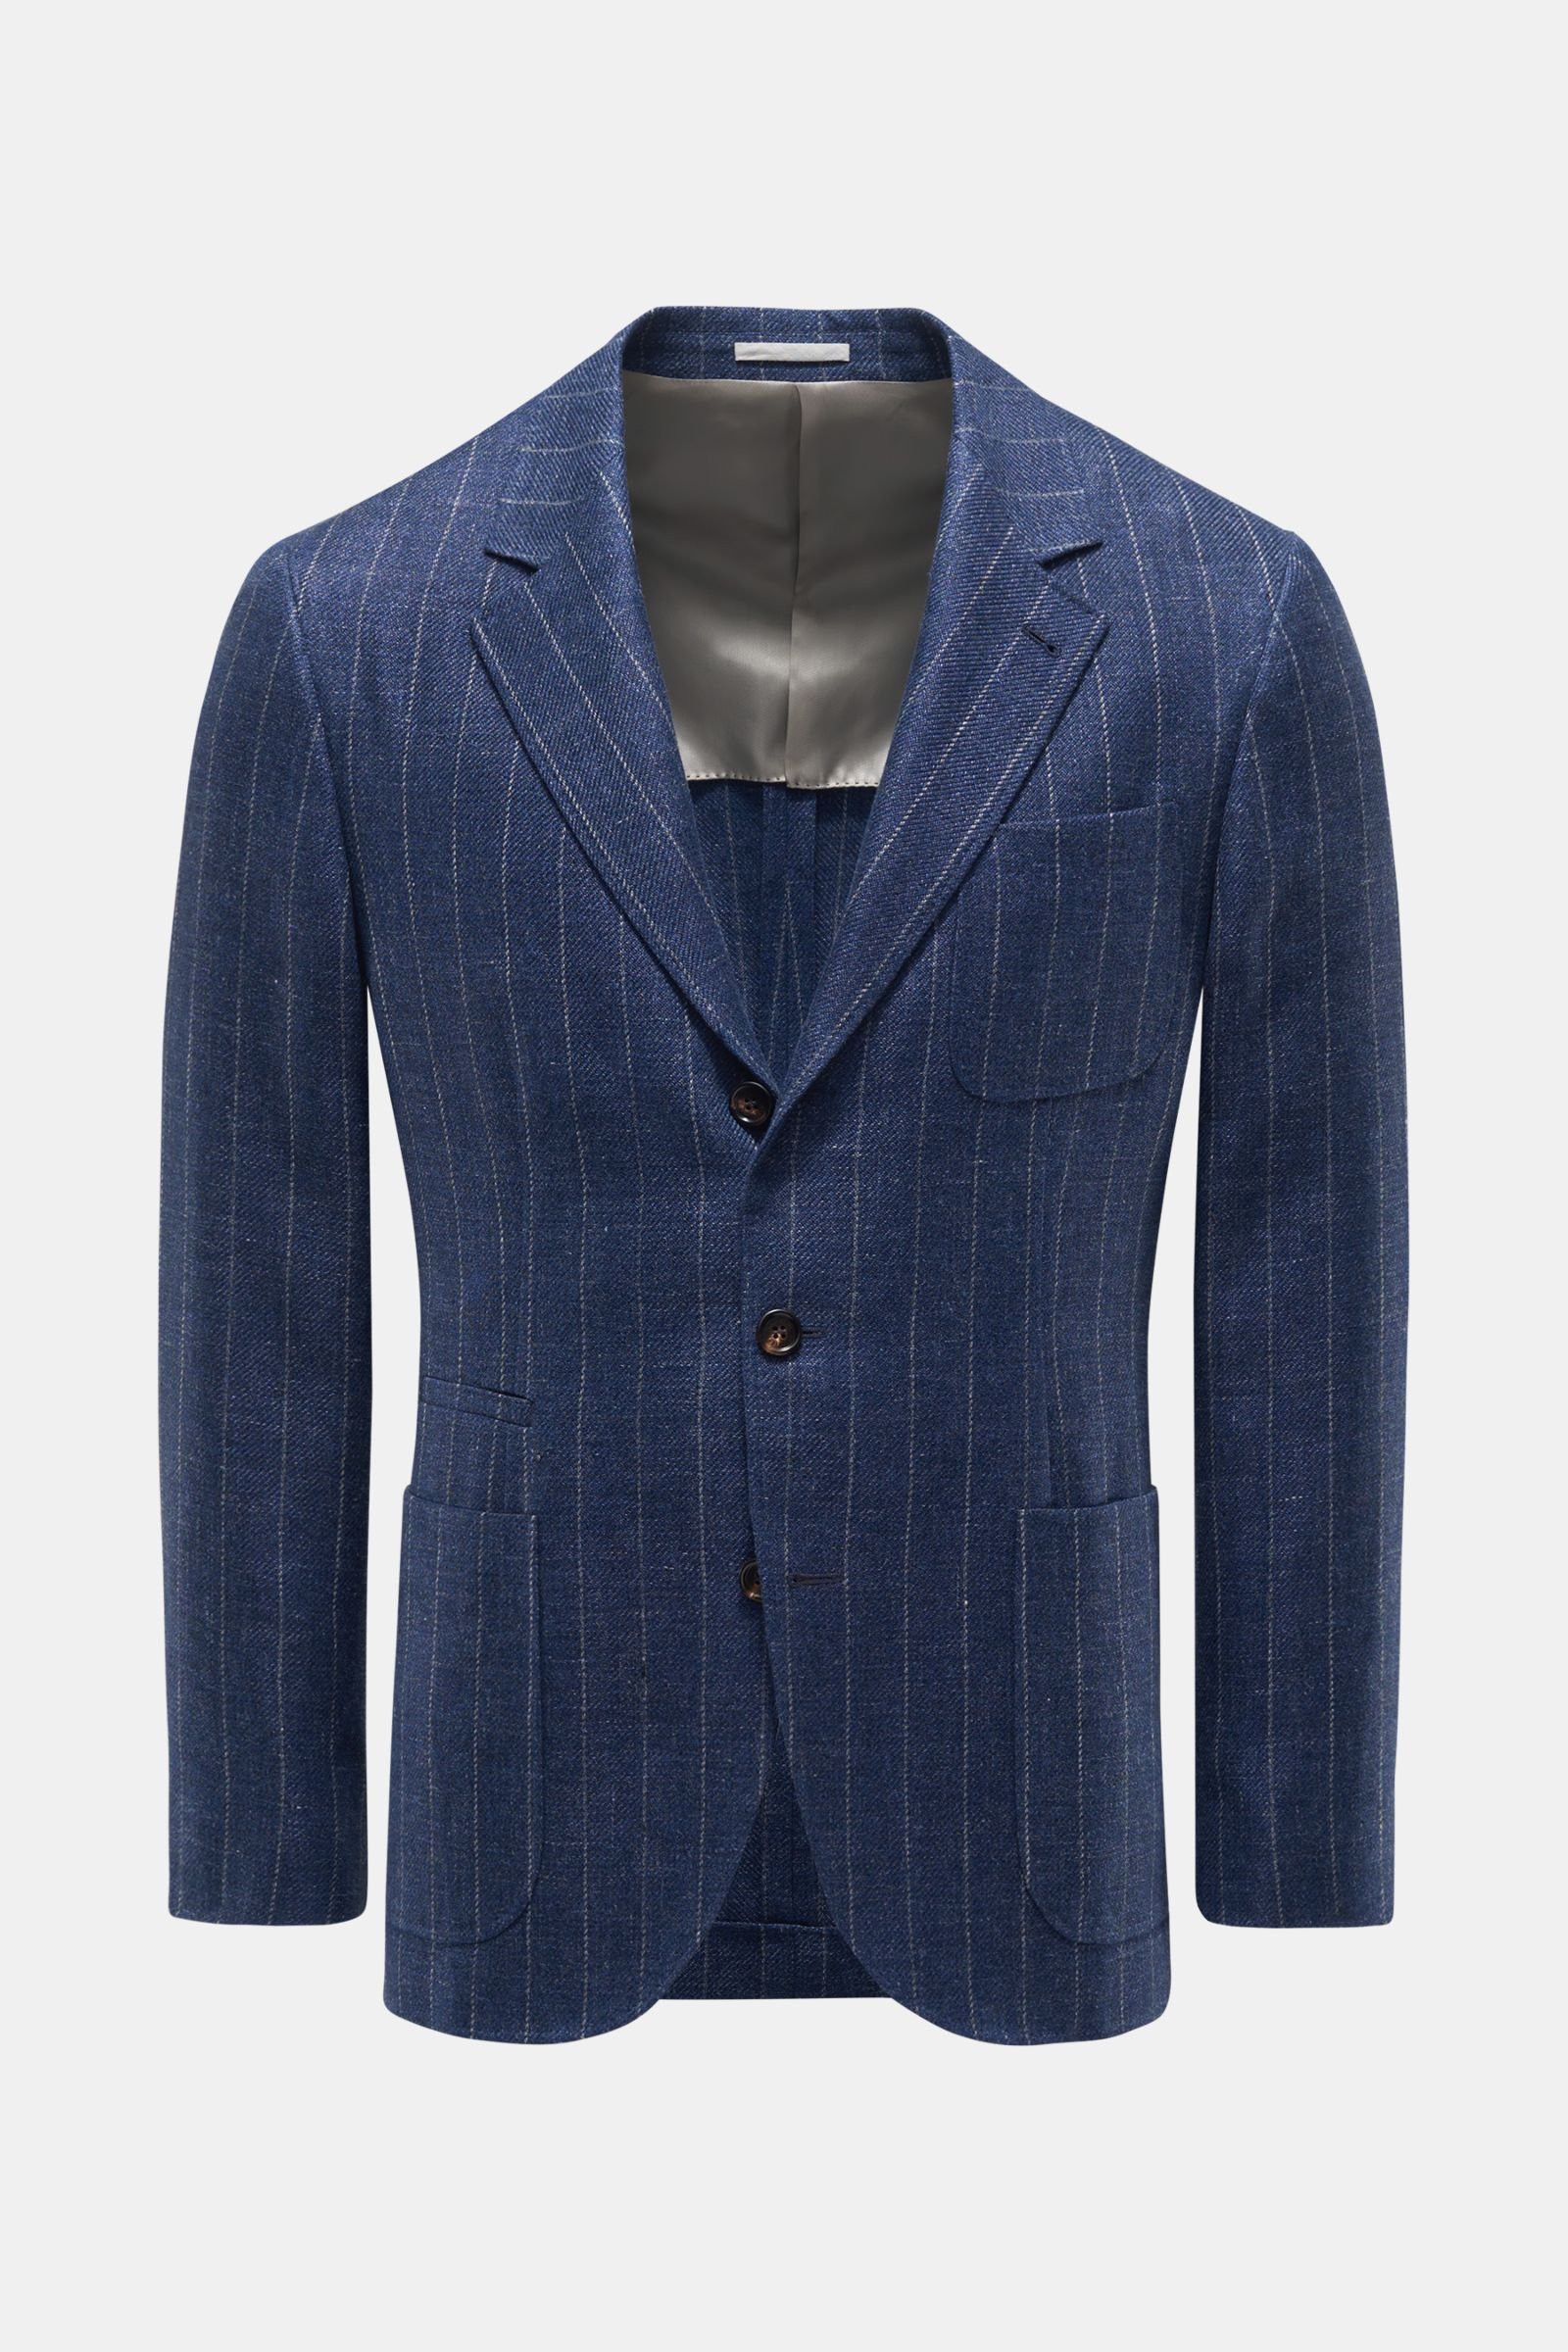 Smart-casual jacket grey-blue/grey striped